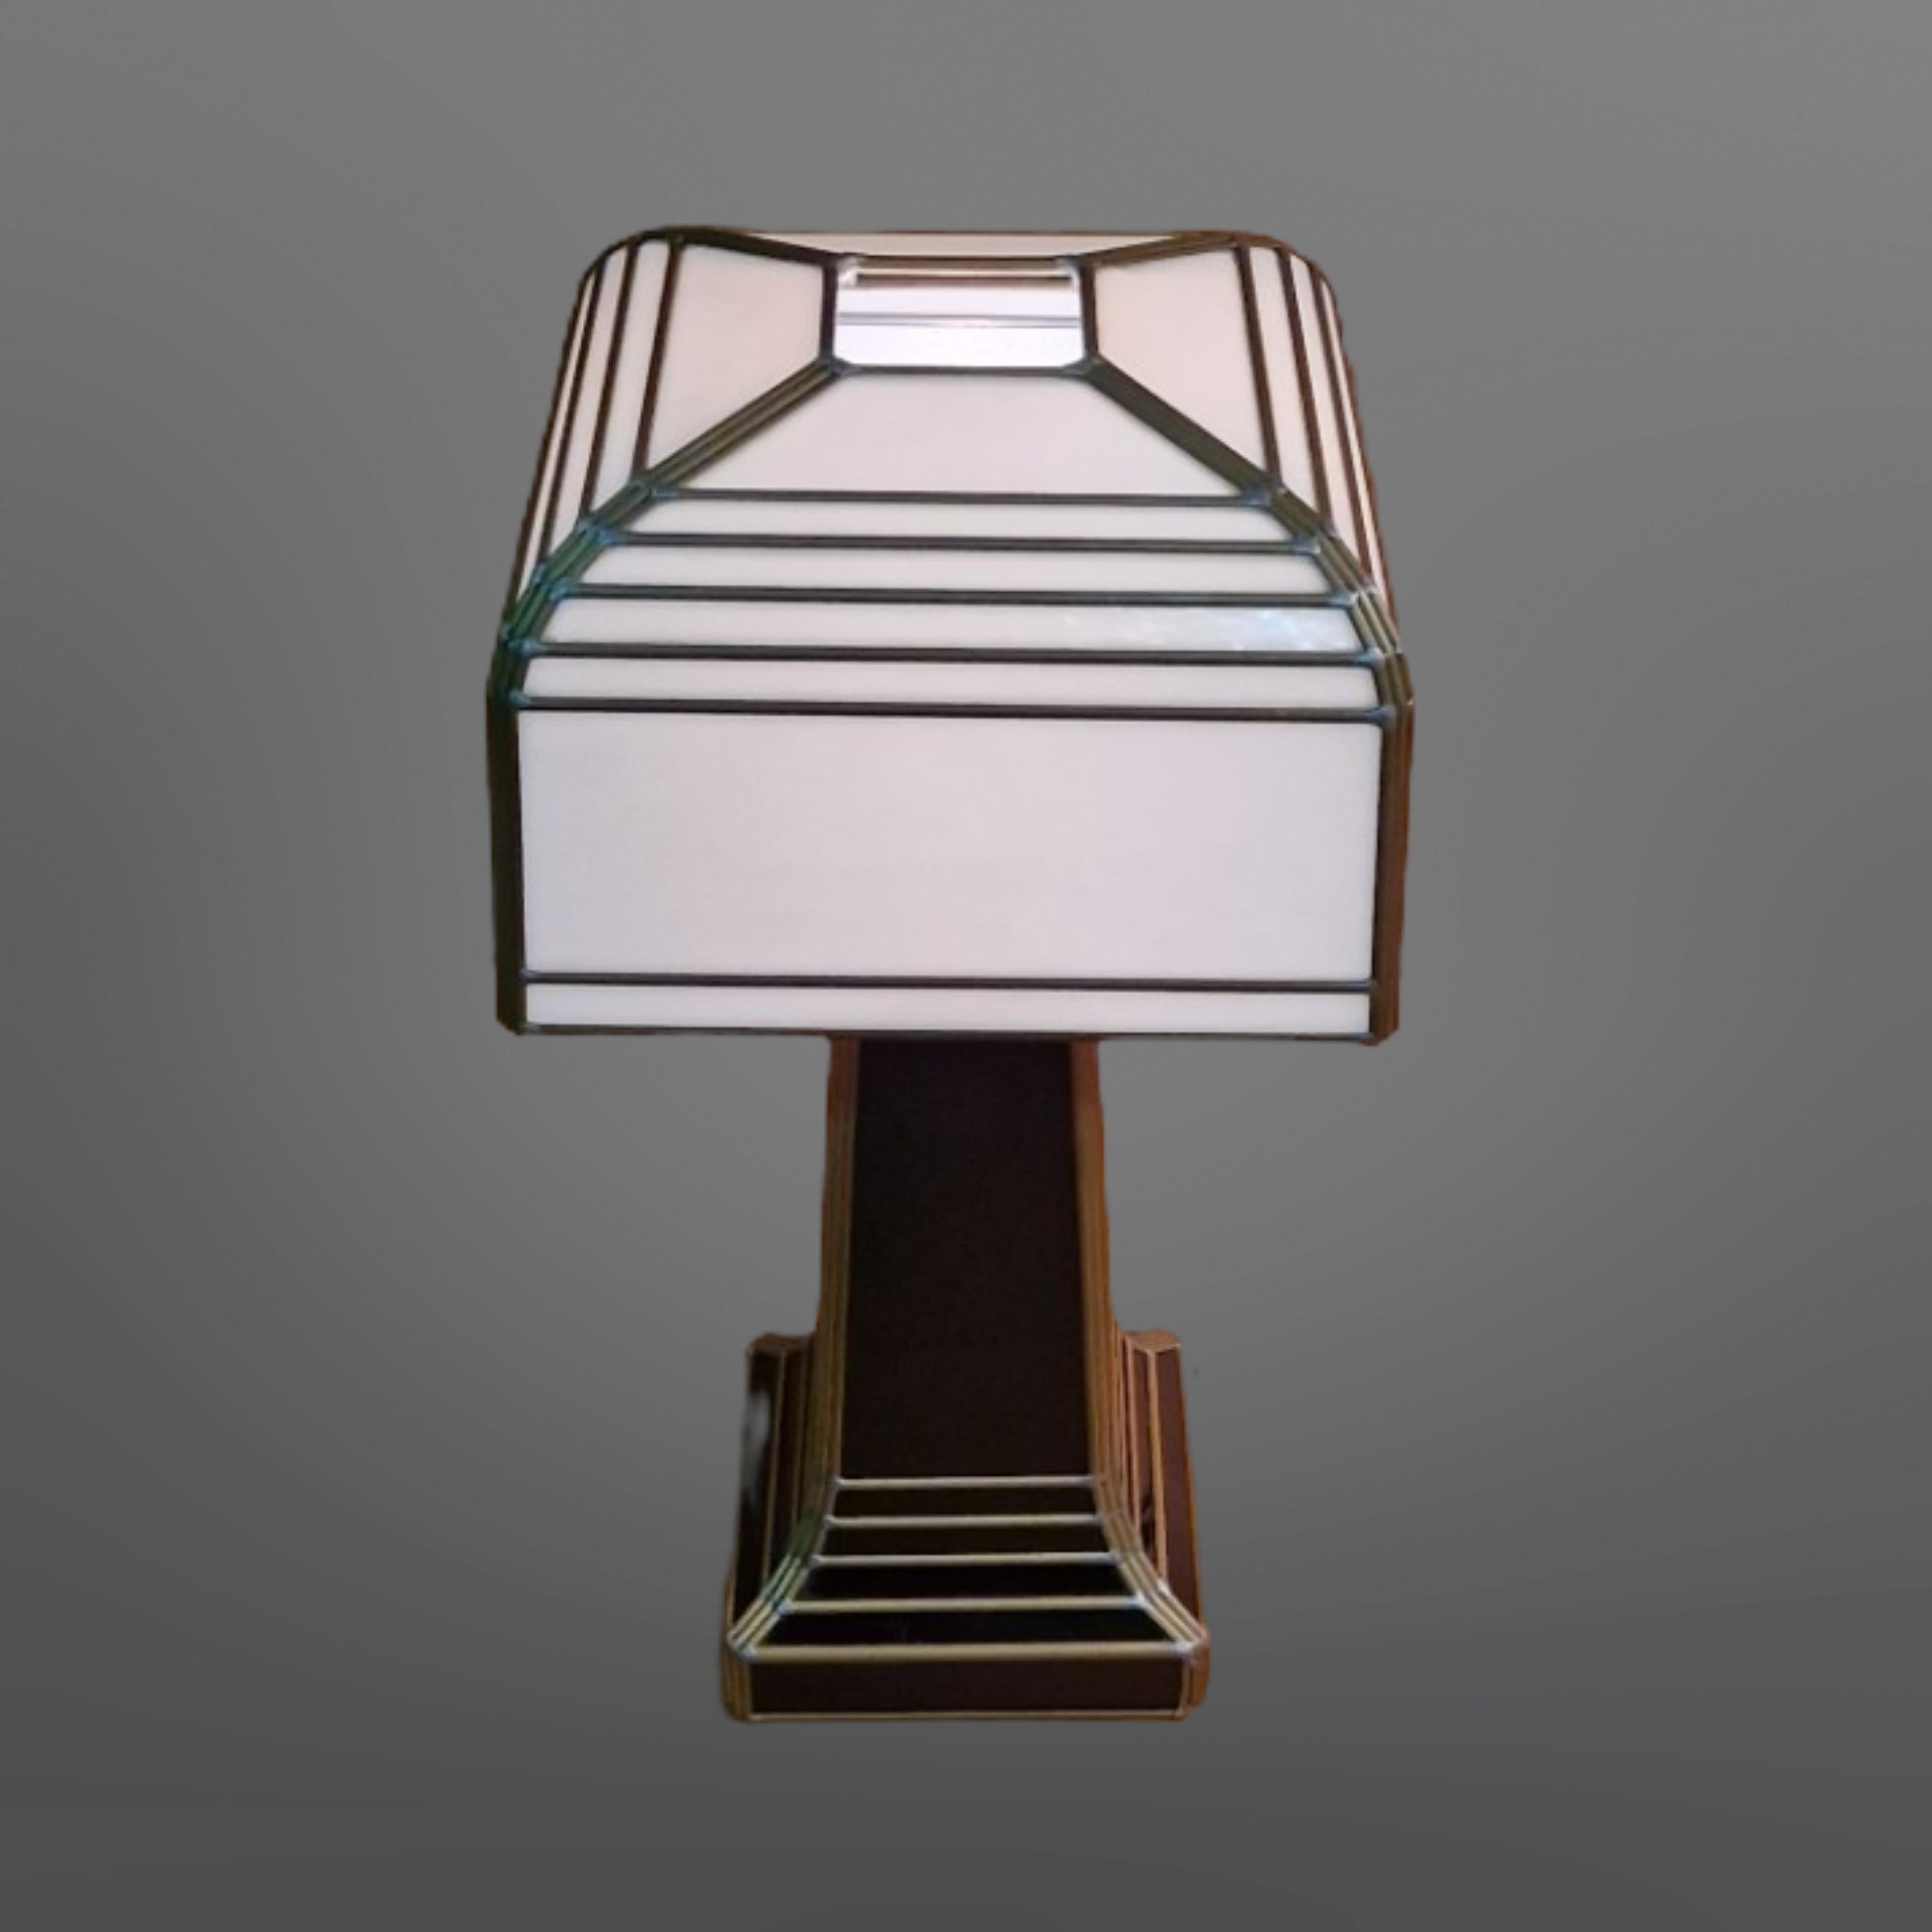 20th Century Tiffany style art deco glass table lamp, Germany 1960s